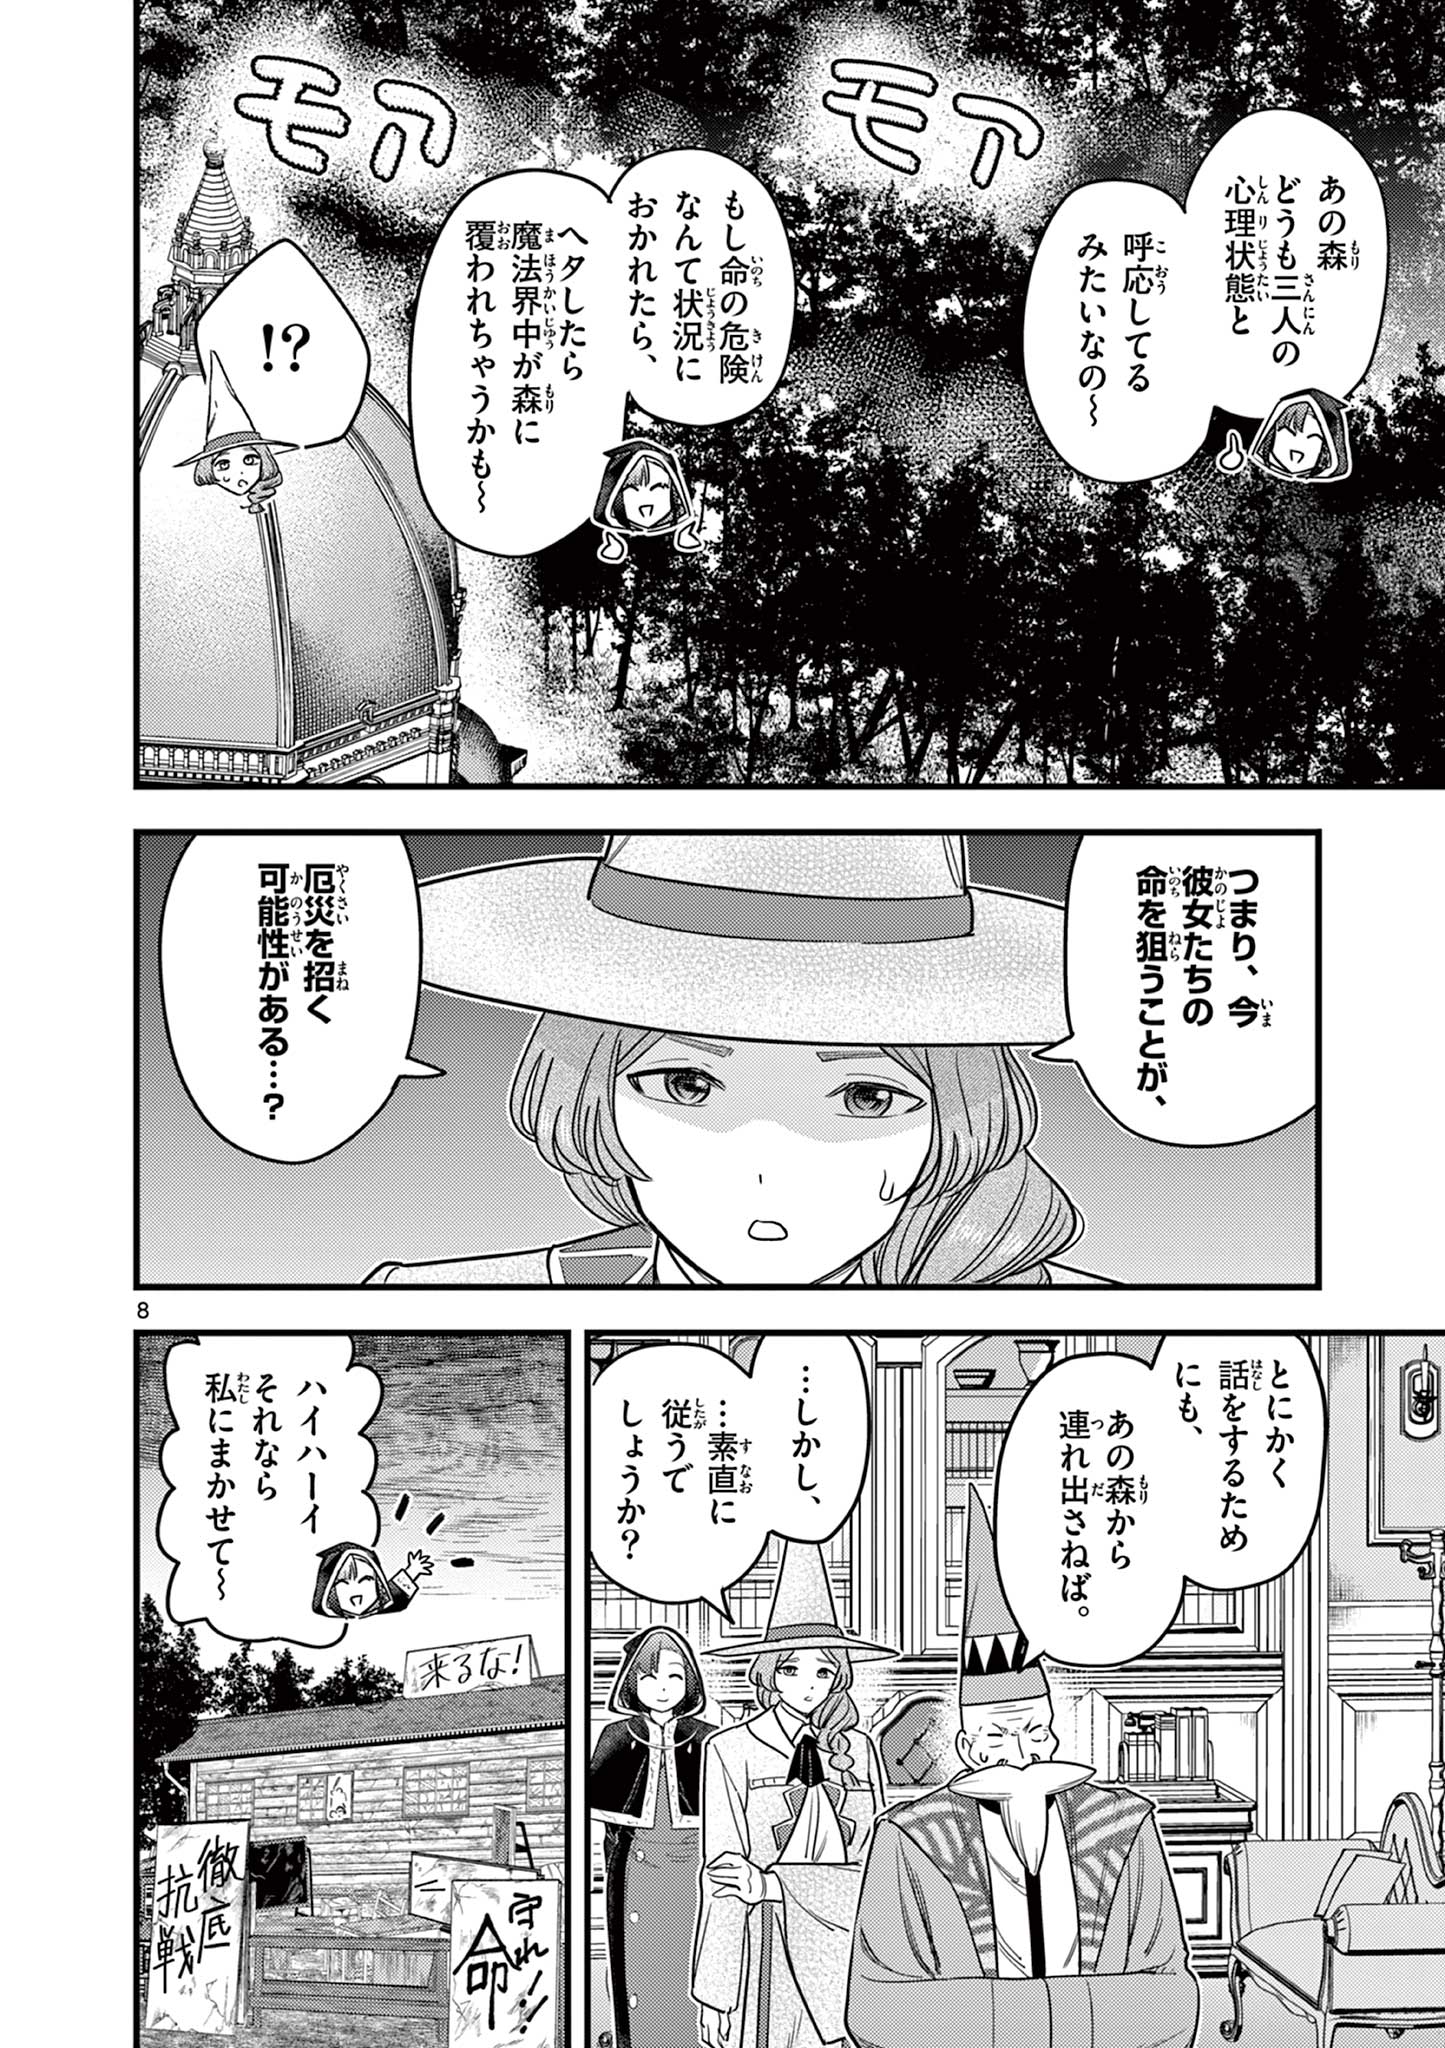 Kuro Mahou Ryou no Sanakunin - Chapter 9 - Page 8